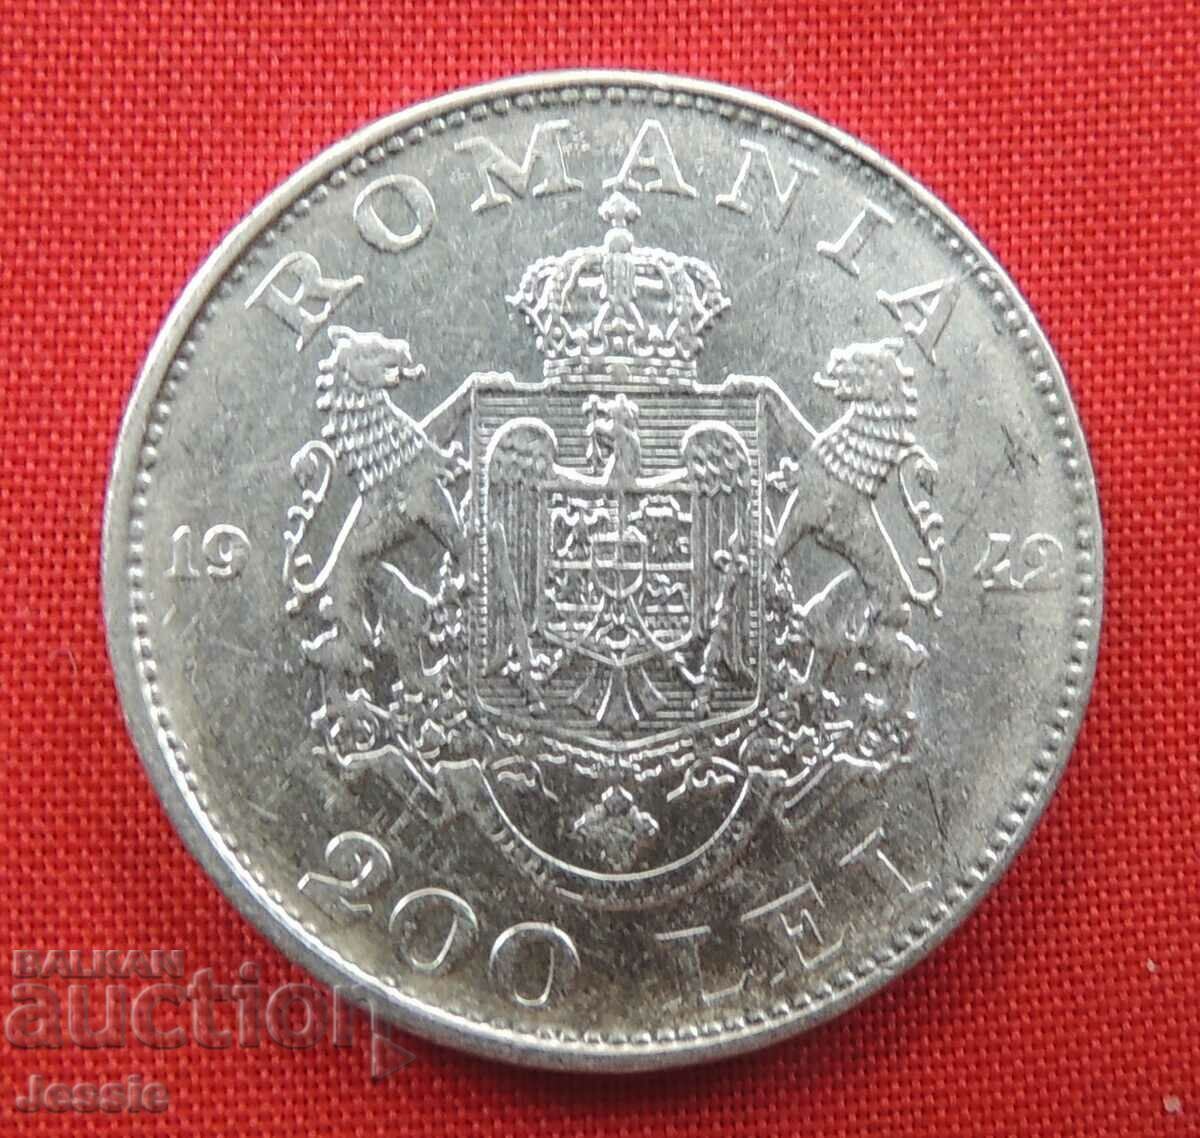 200 lei Romania 1942 silver - QUALITY COMPARE AND EVALUATE